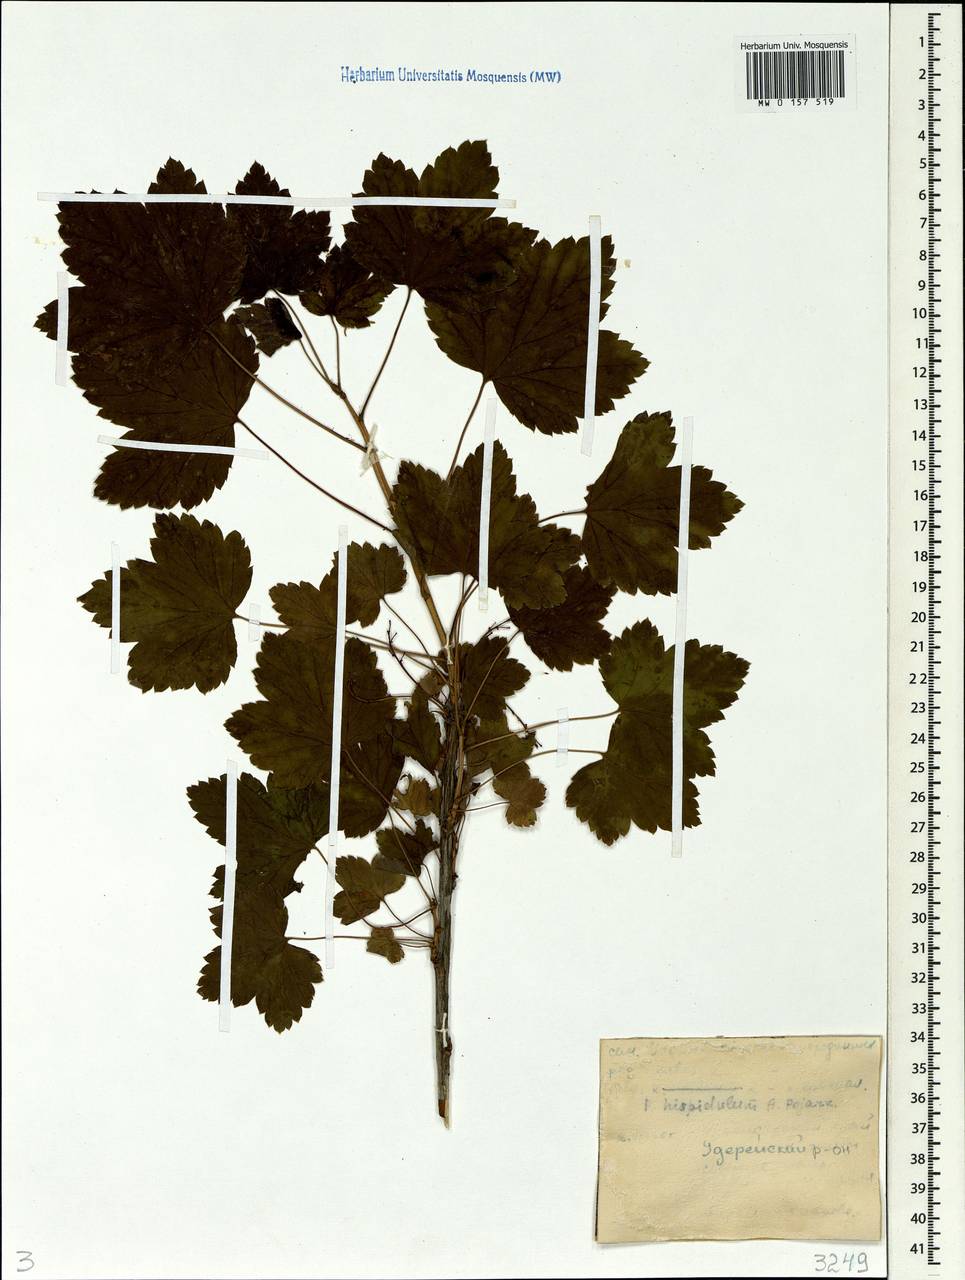 Ribes spicatum subsp. hispidulum (Jancz.) L. Hämet-Ahti, Сибирь, Центральная Сибирь (S3) (Россия)